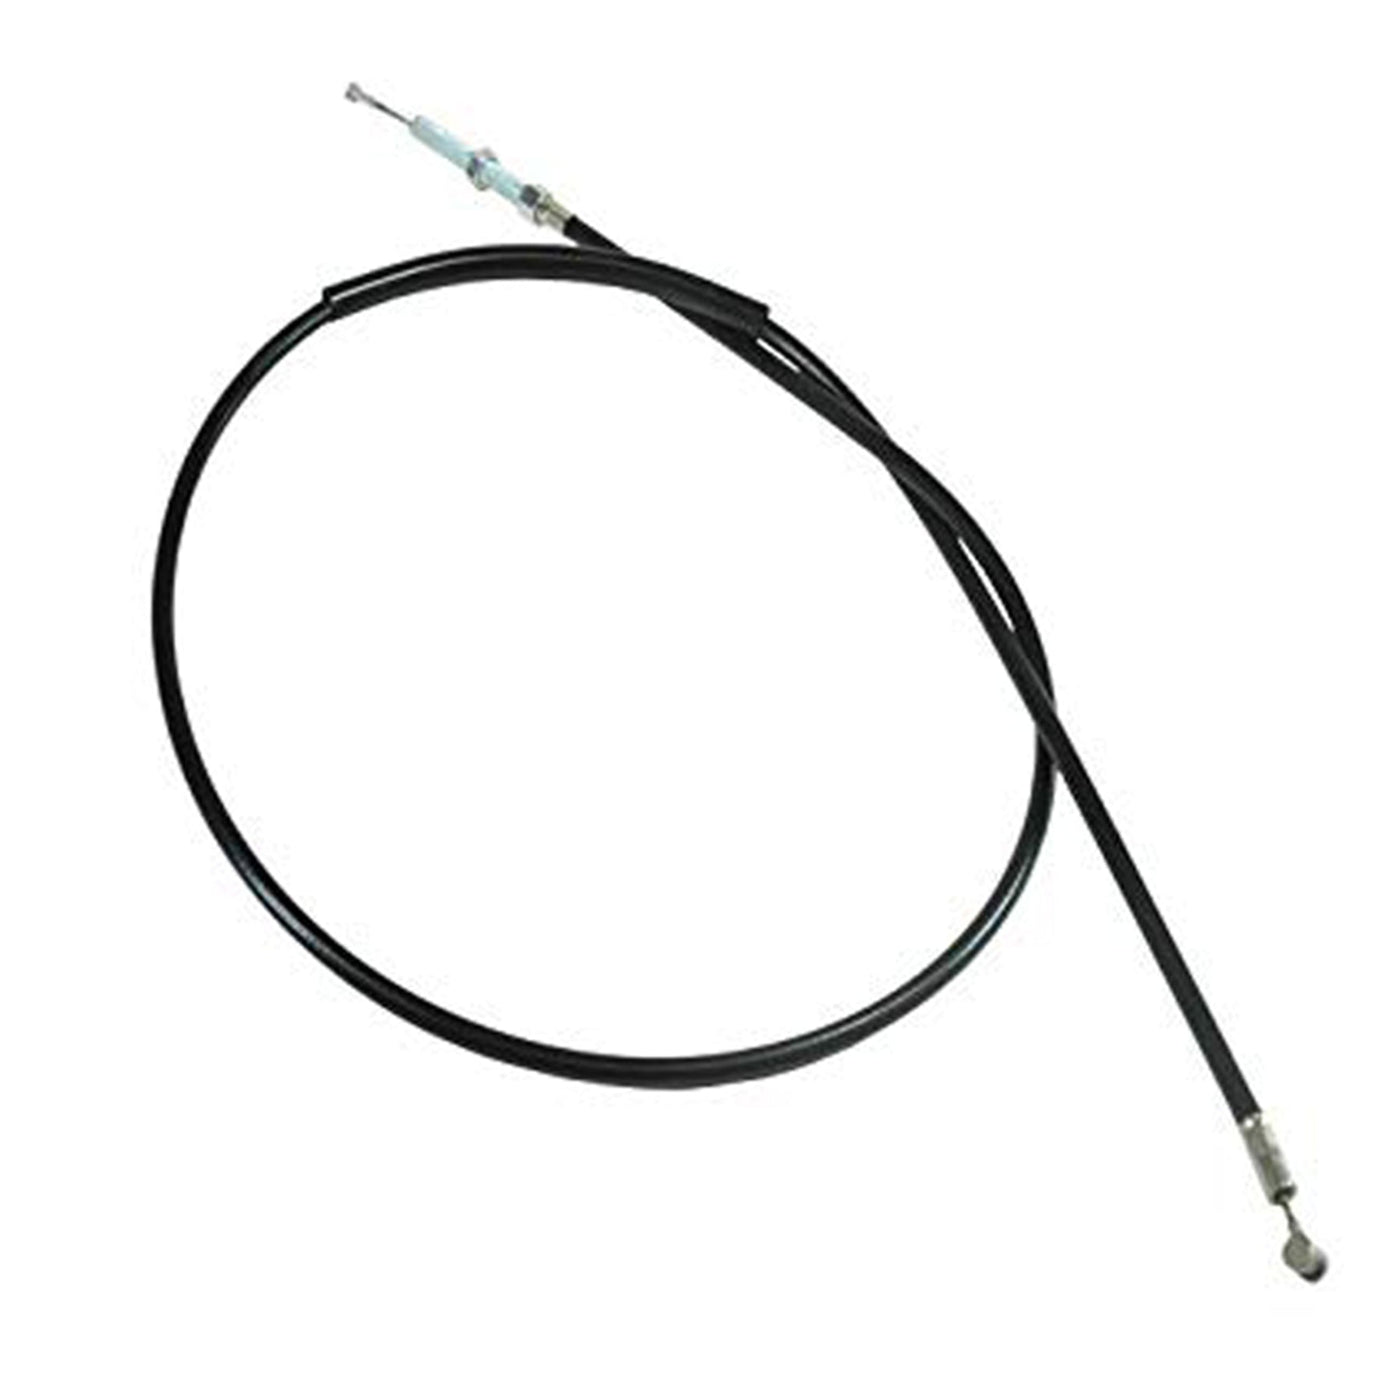 SPI 05-138-61 Brake Cable #05-138-61